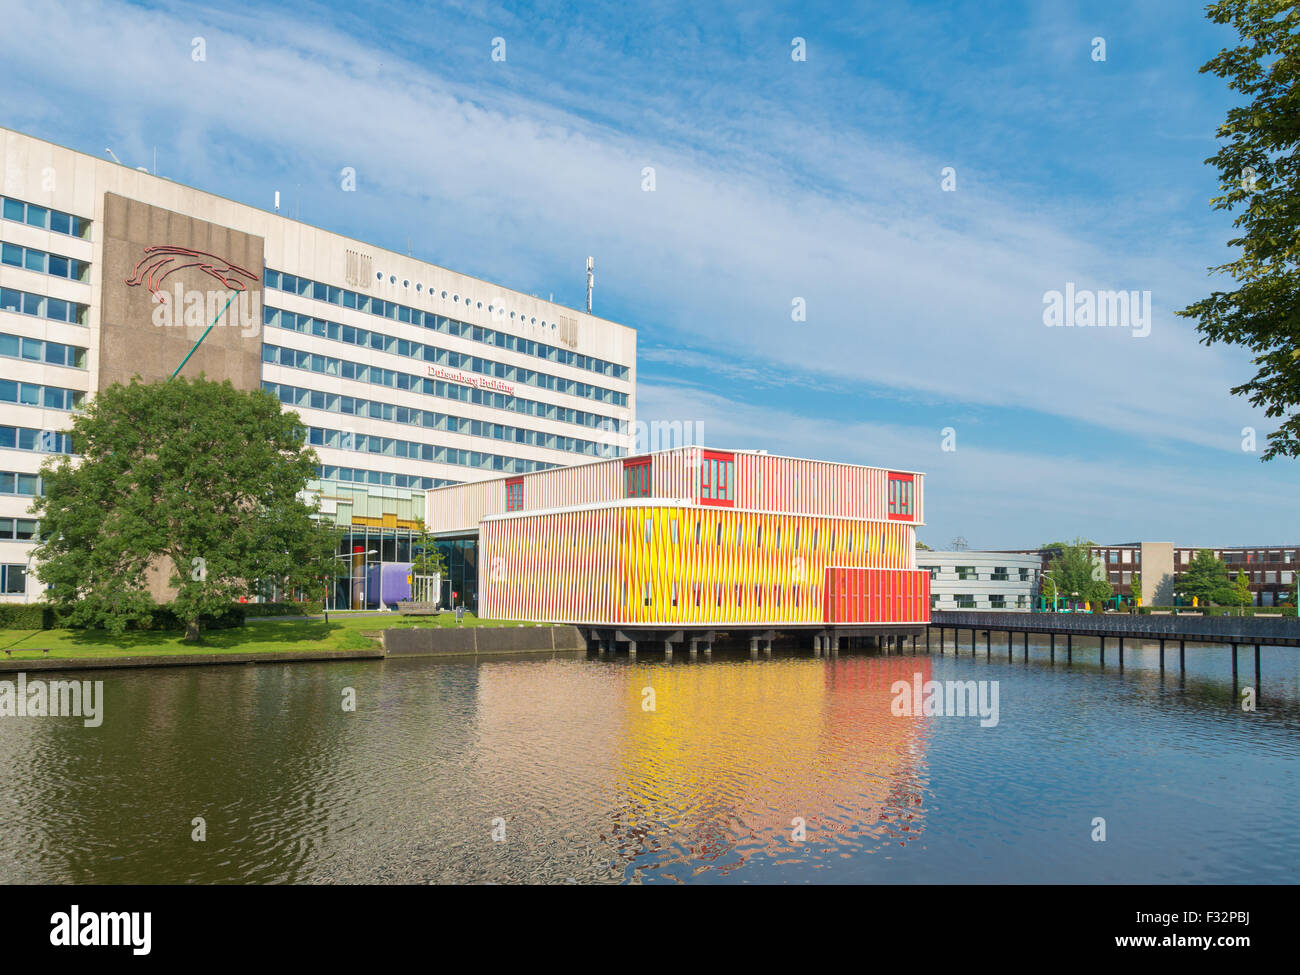 GRONINGEN, NETHERLANDS - AUGUST 22, 2015: Modern orange building on the groningen university campus. The university counts aroun Stock Photo